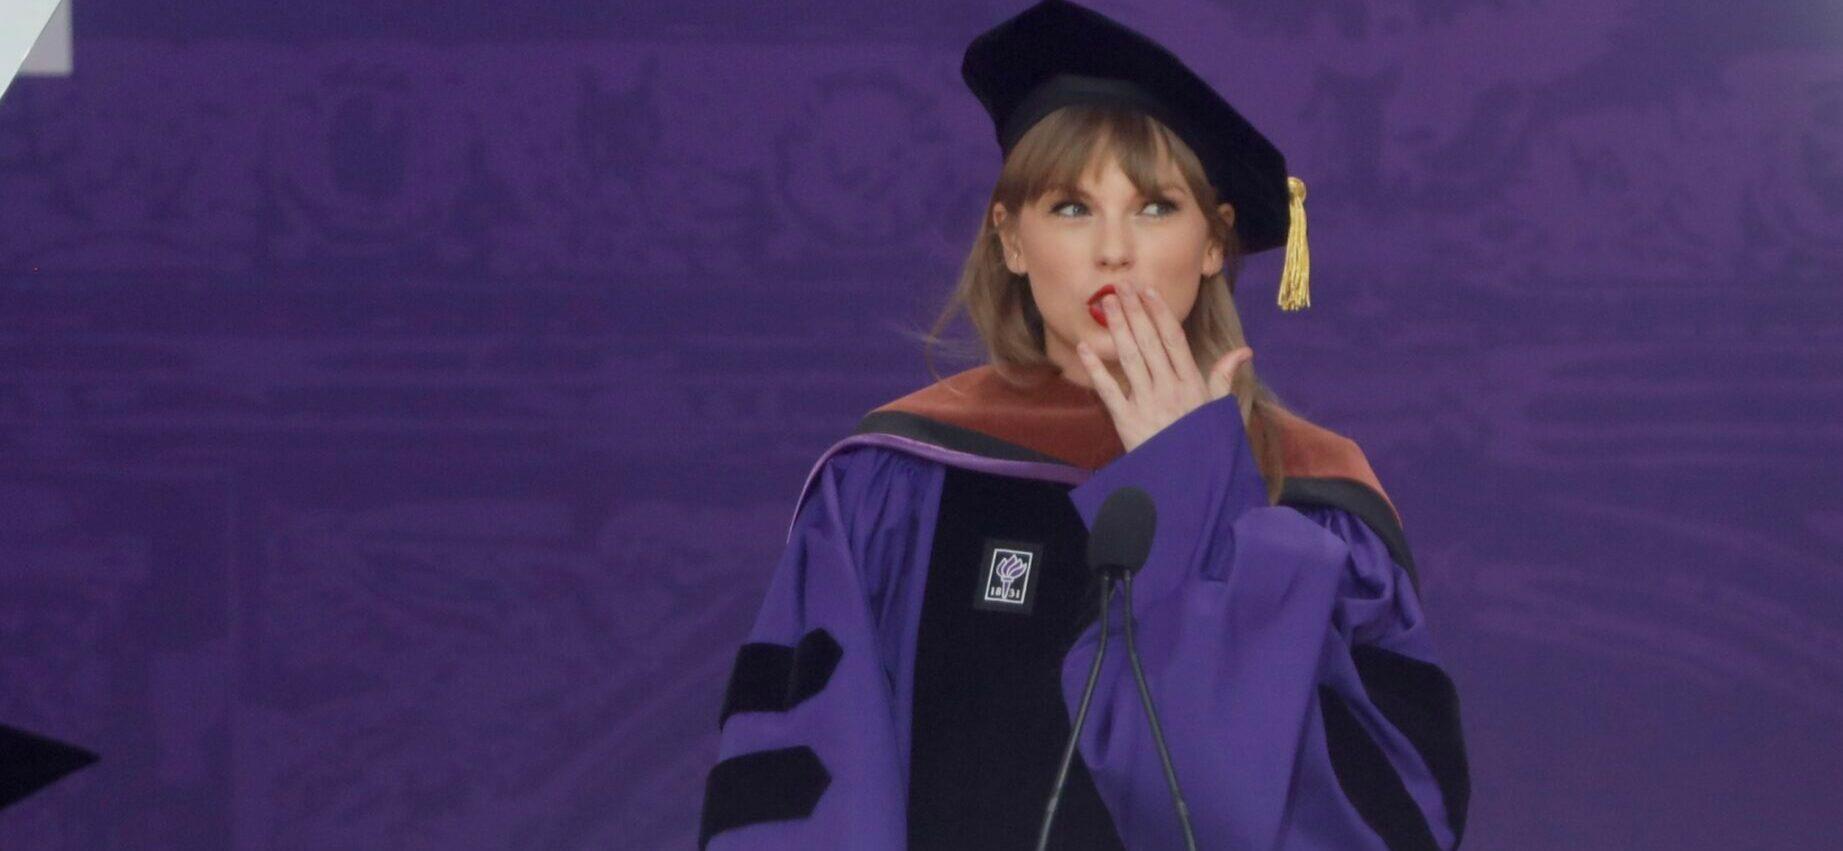 Taylor Swift accepts NYU Honorary degree